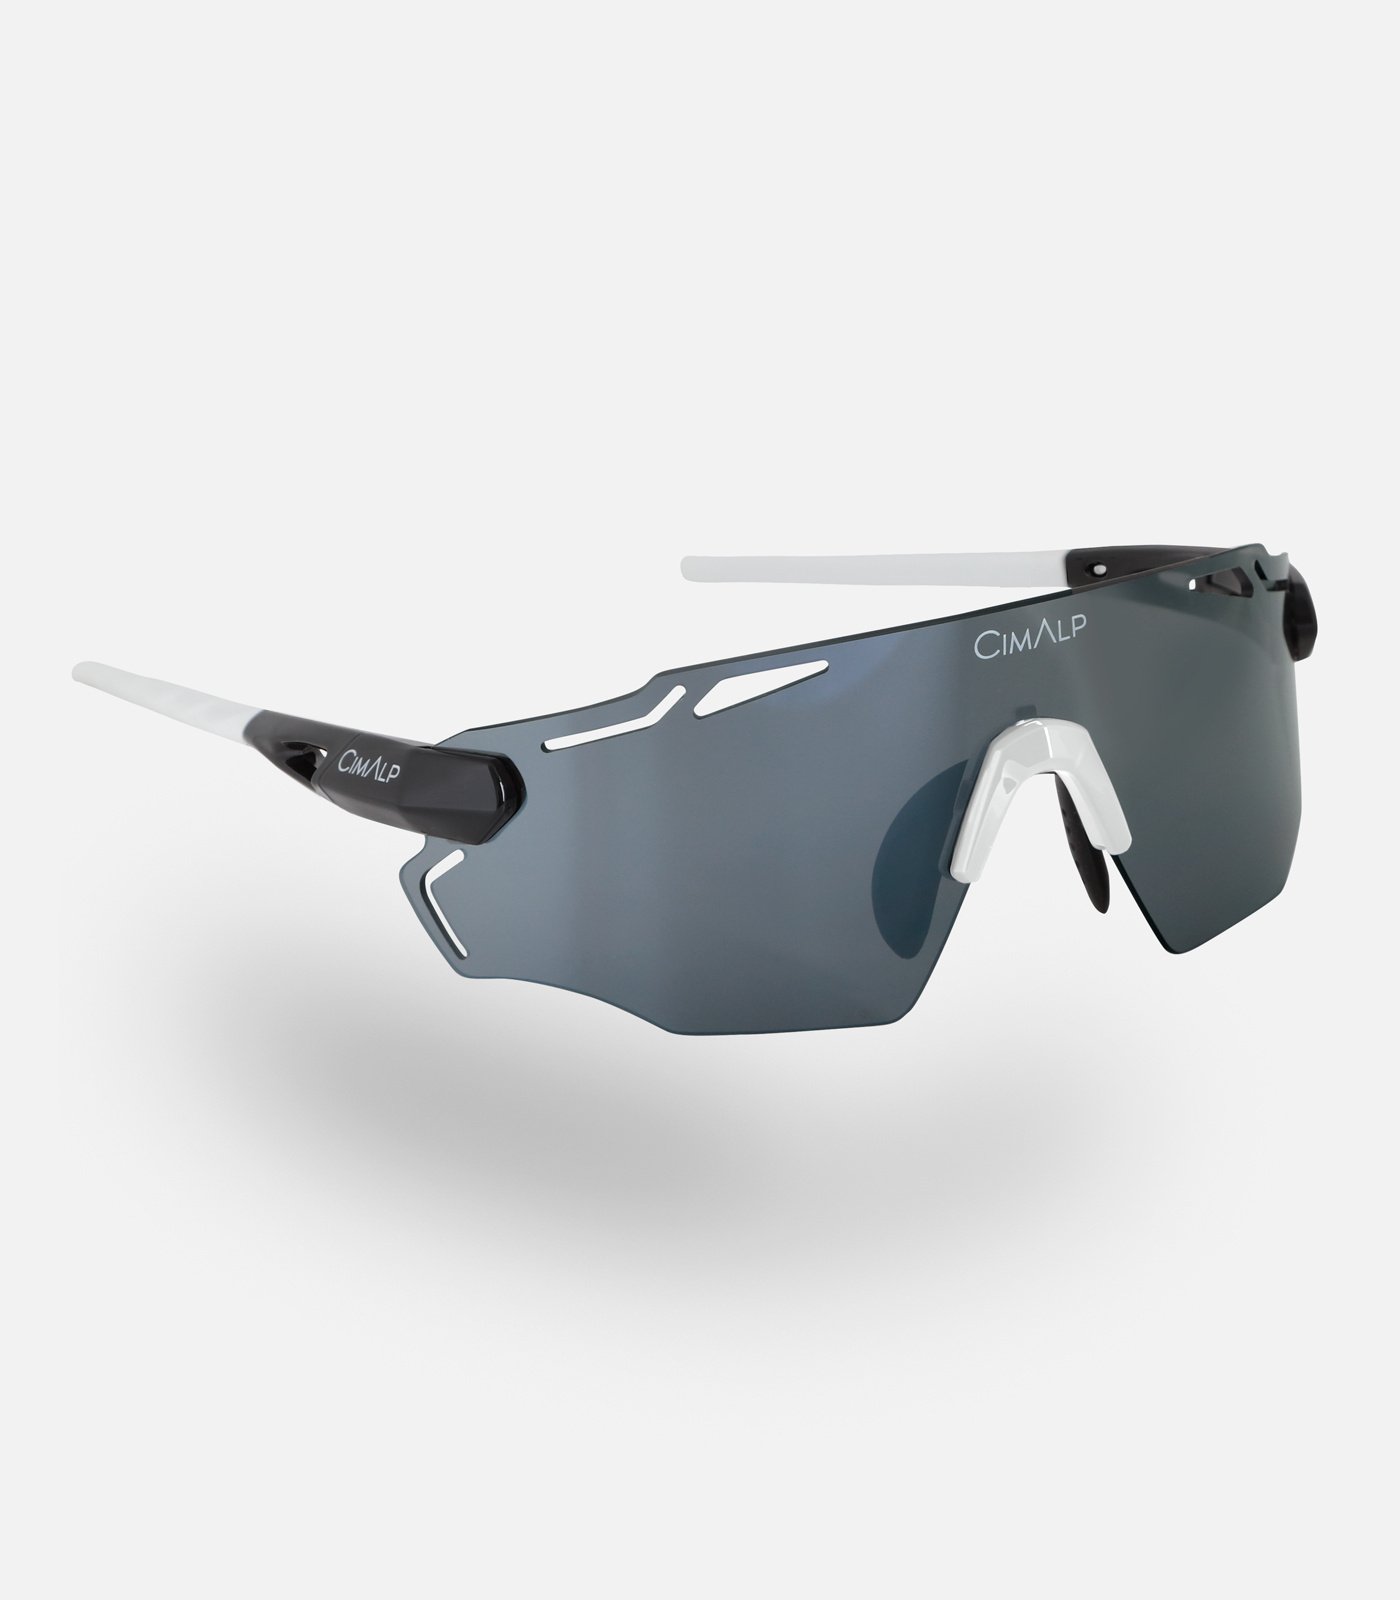 https://static.cimalp.fr/23177-large_default/vision-one-sport-sunglasses.jpg